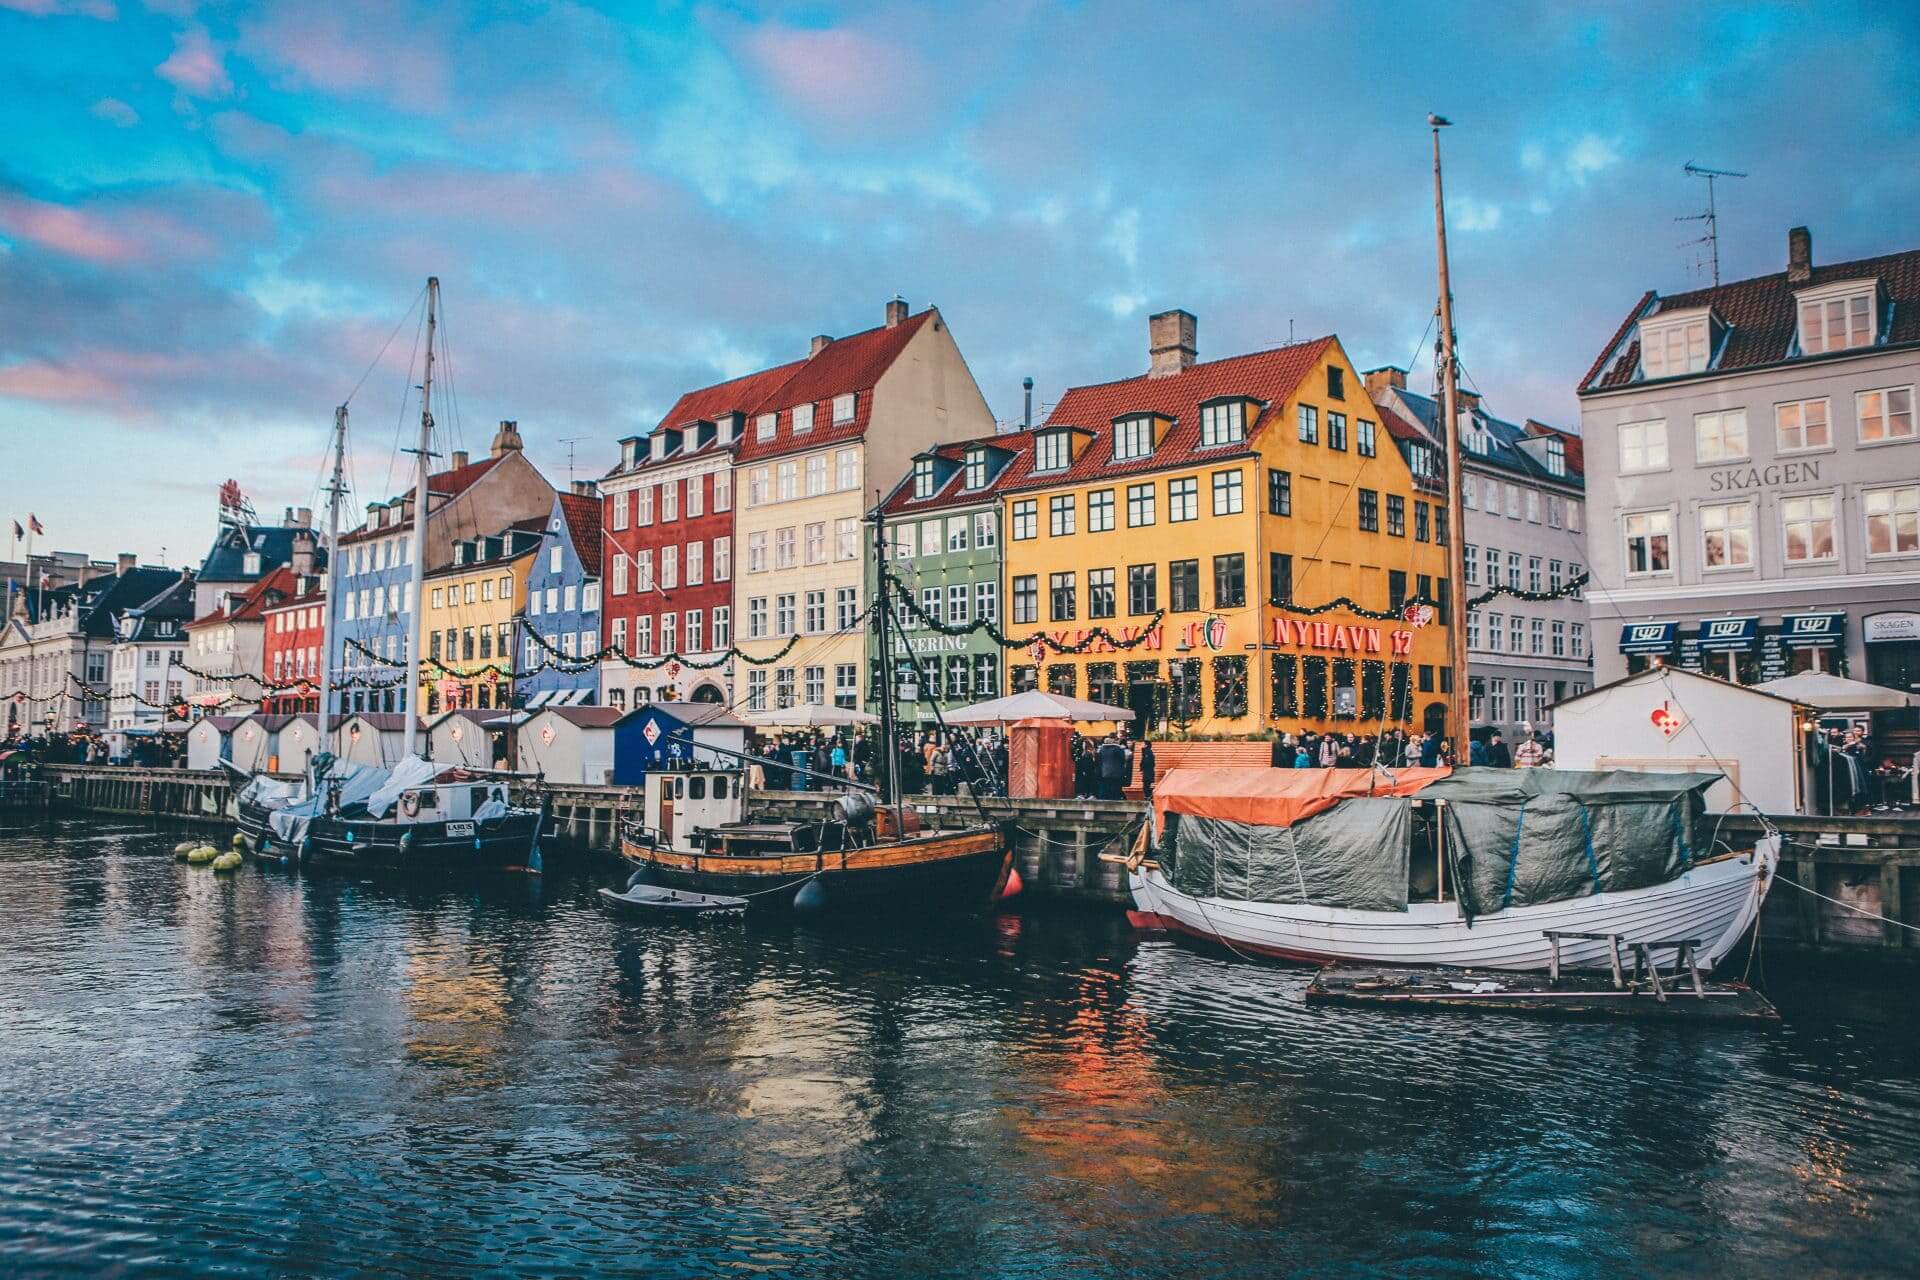 Copenhagen harbor on a Jewish heritage tour of Copenhagen. Boats in front of typical copenhagen buildings, one yellow, one green, one red.